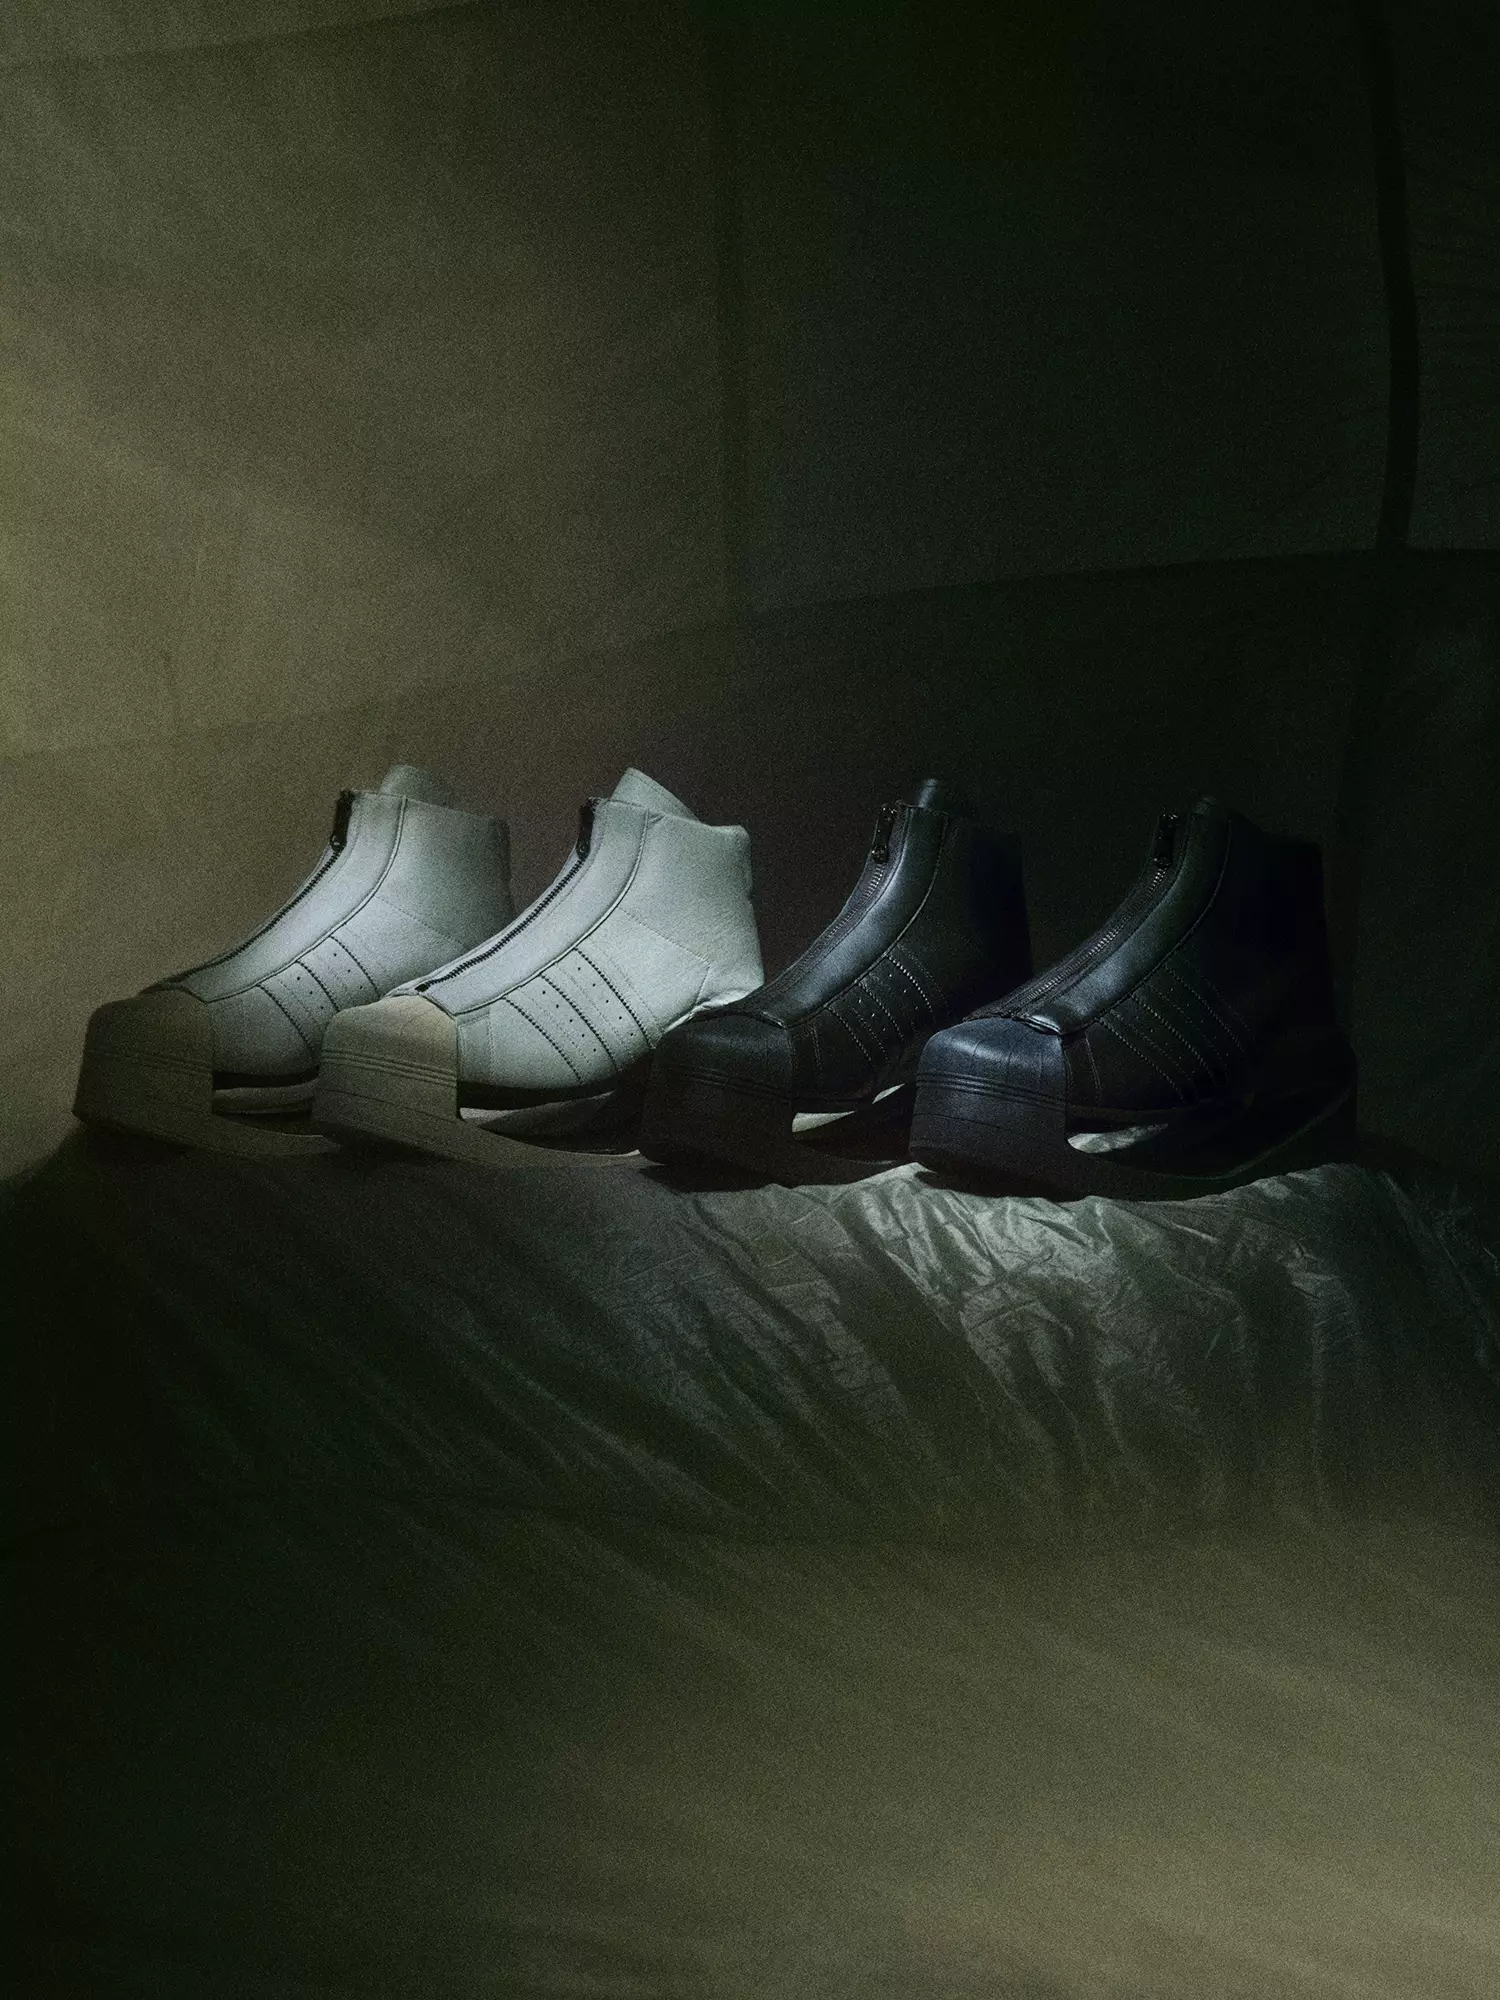 Yohji Yamamoto and adidas Unleash the Y-3 GENDO Revolution